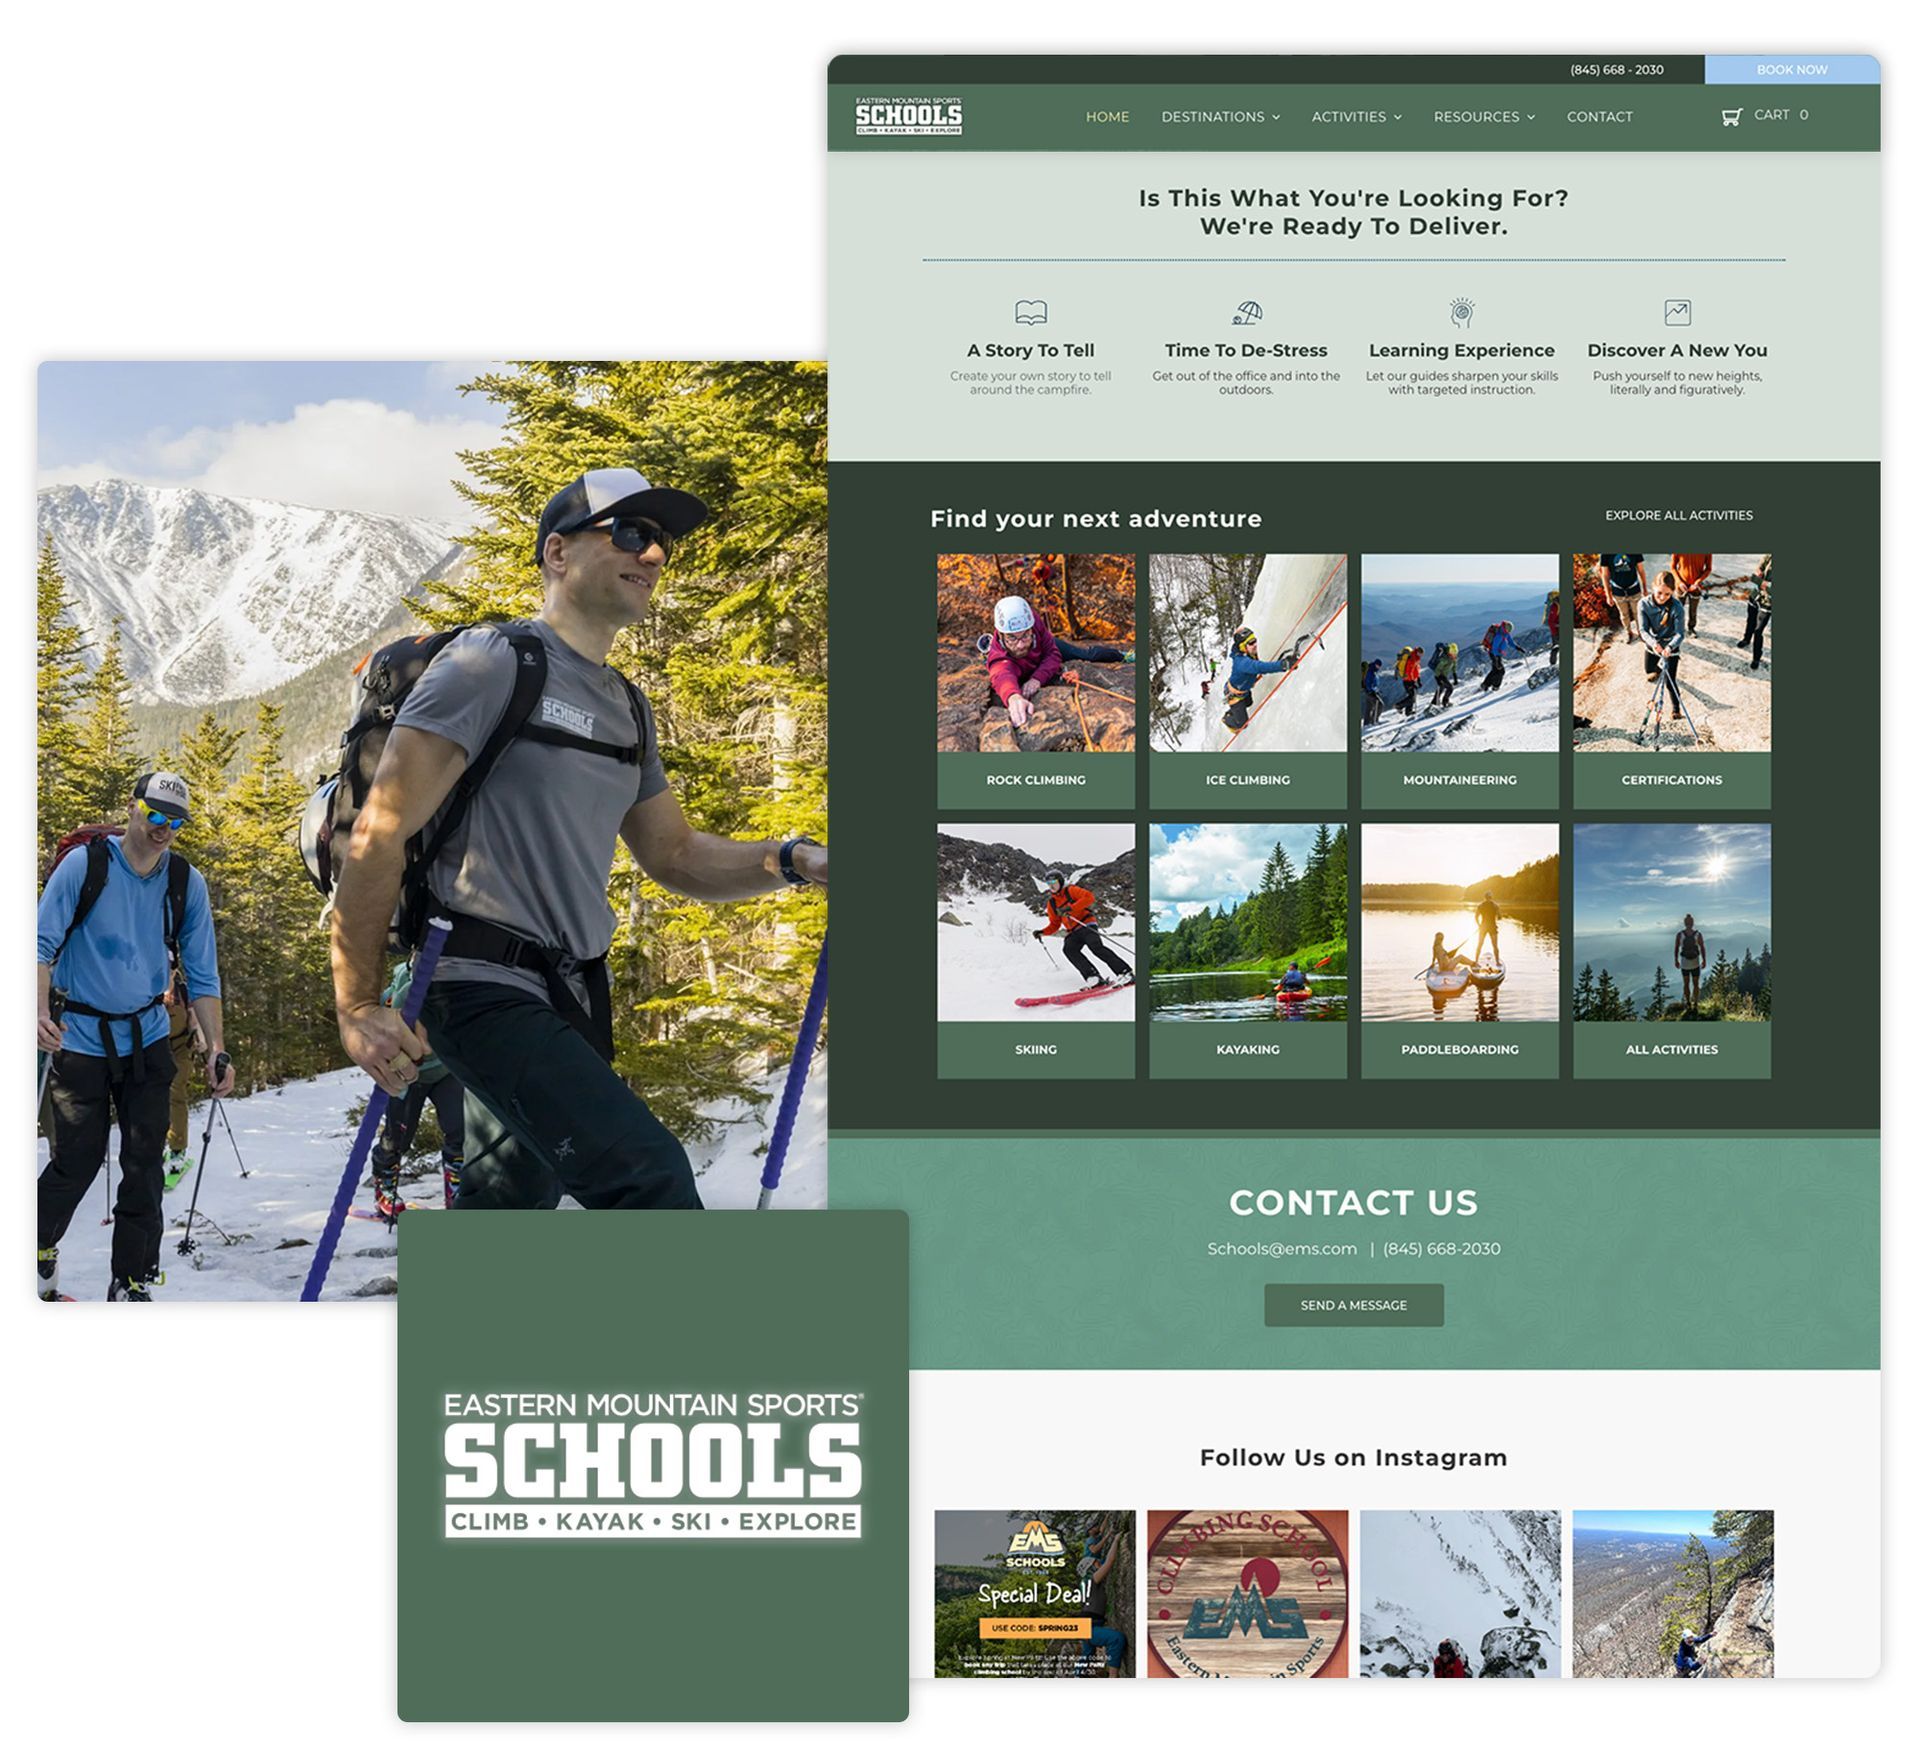 Display of Eastern Mountain Sports Schools Website